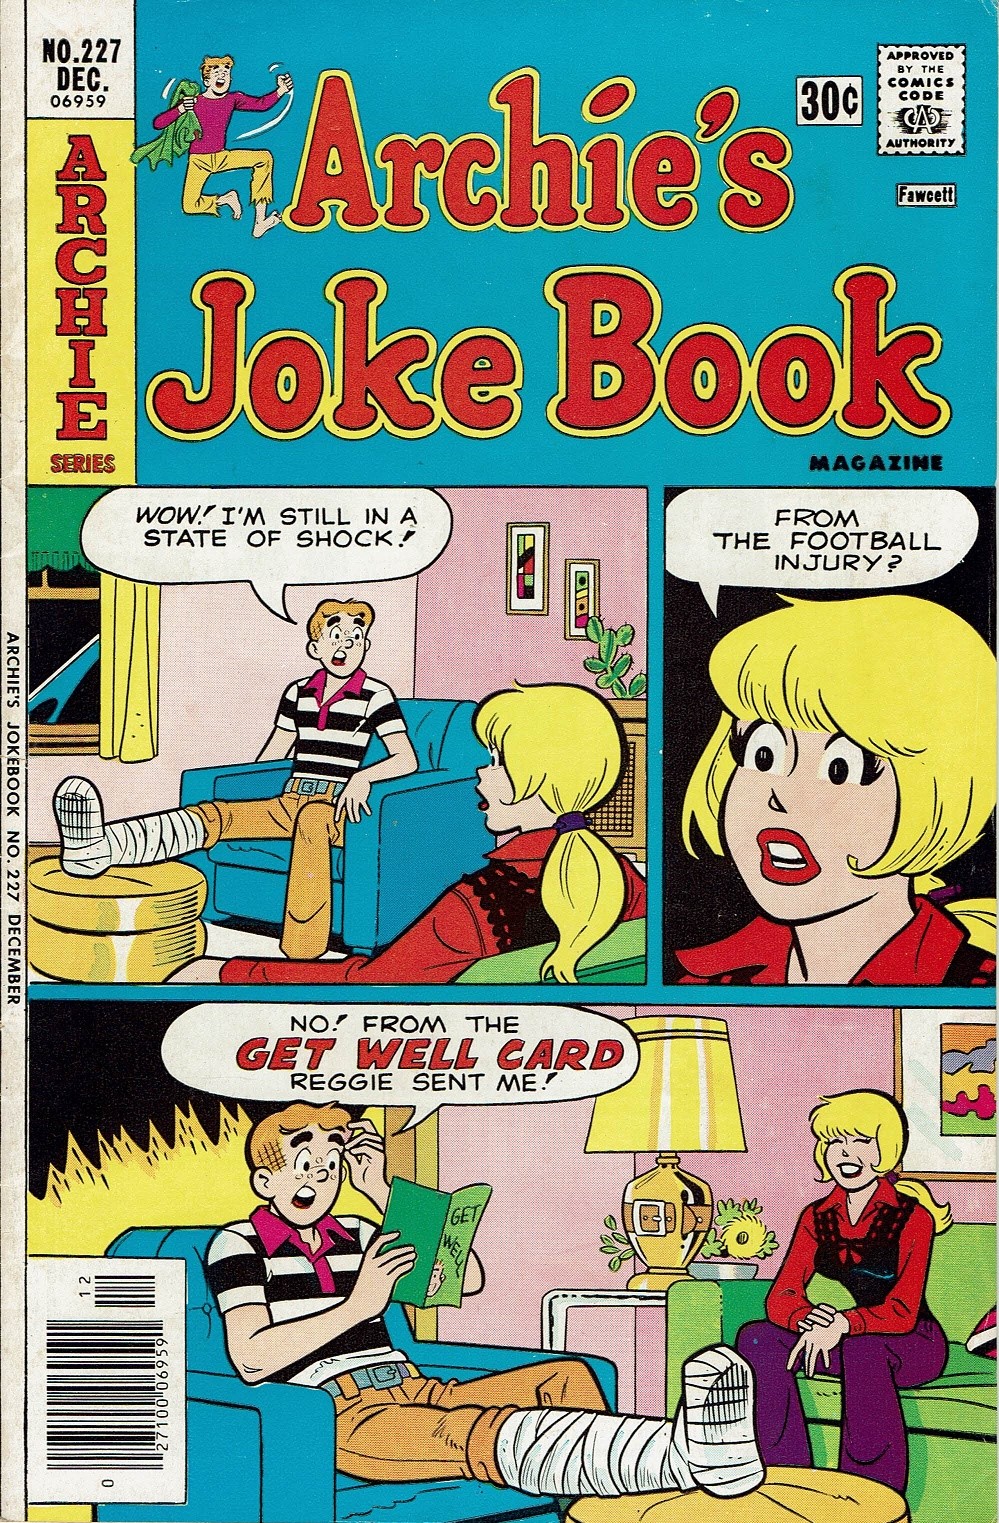 Archie's Joke Book Magazine issue 227 - Page 1